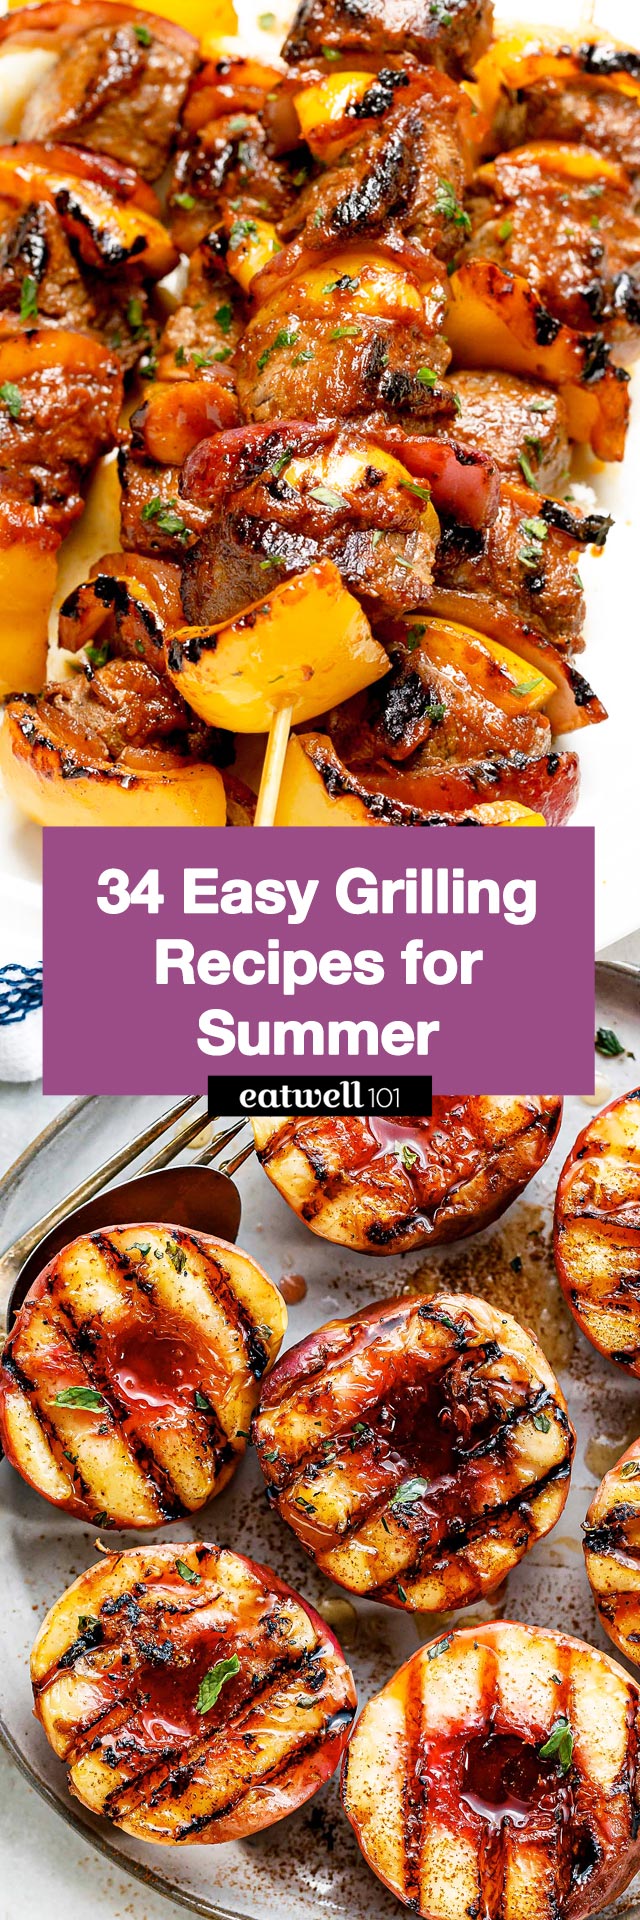 Grilling Essentials For Summer Meals